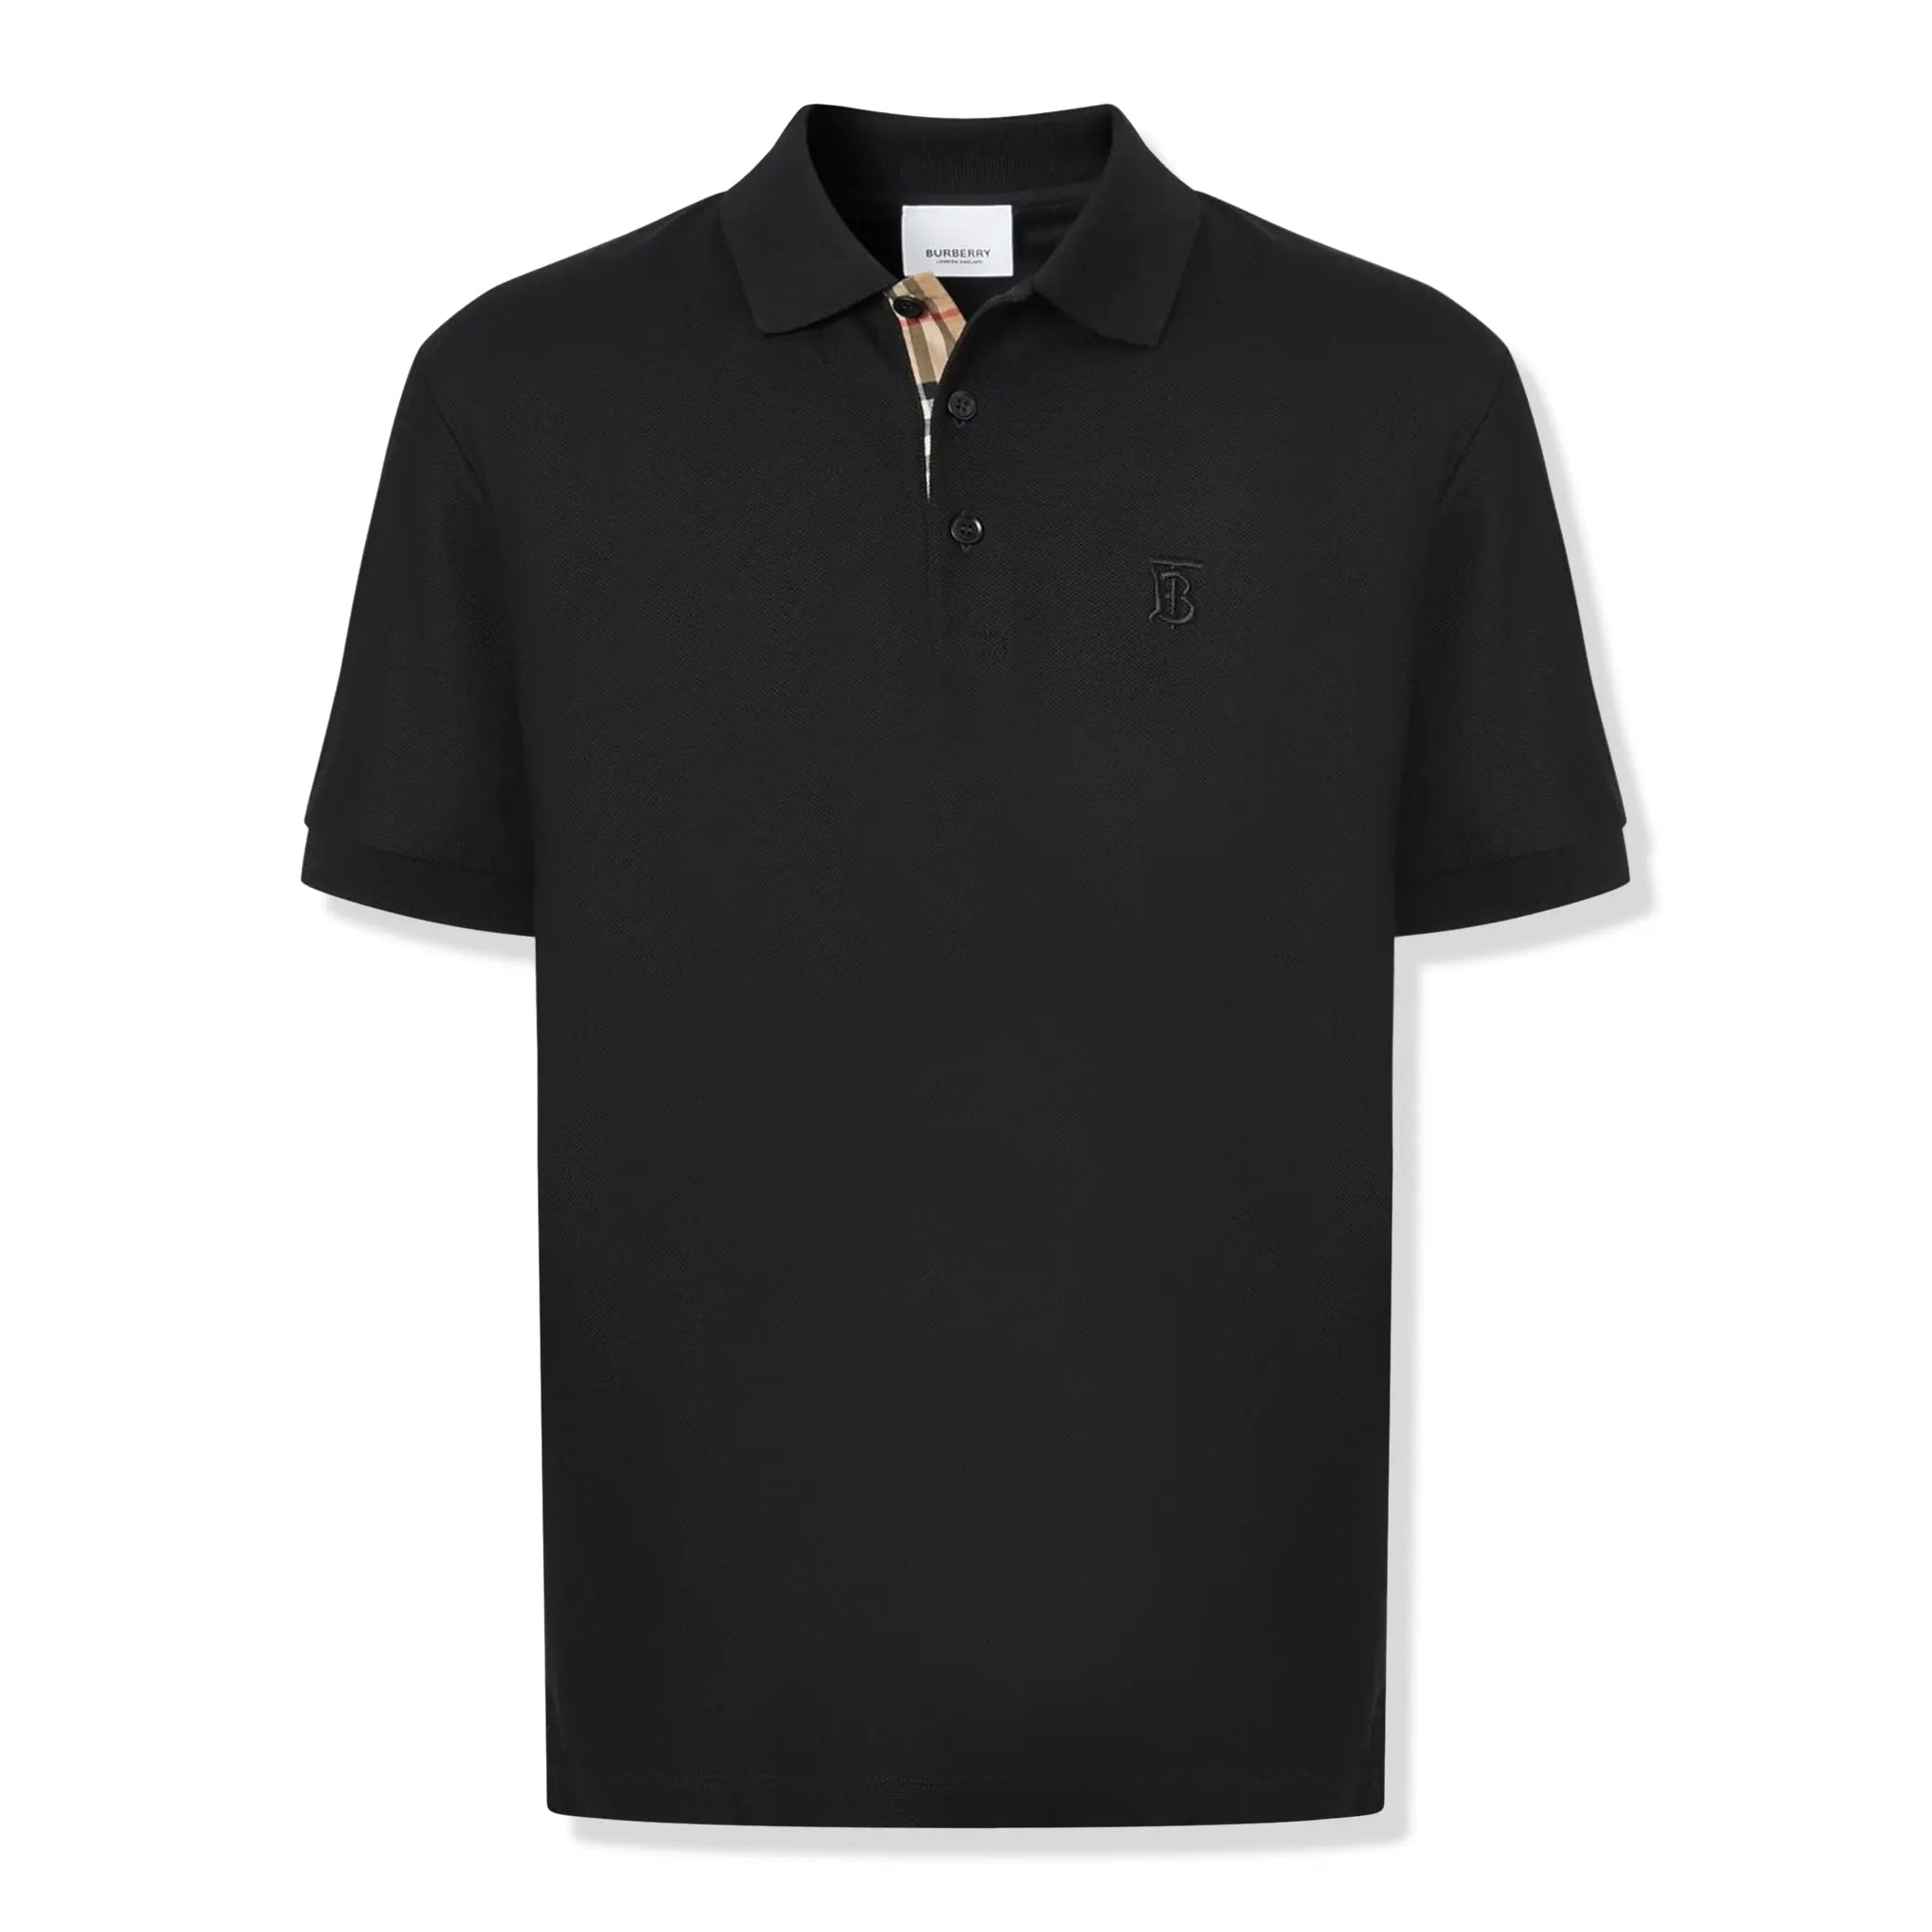 Front view of Burberry Eddie Logo Piqué Cotton Black Polo Shirt lange P80552281